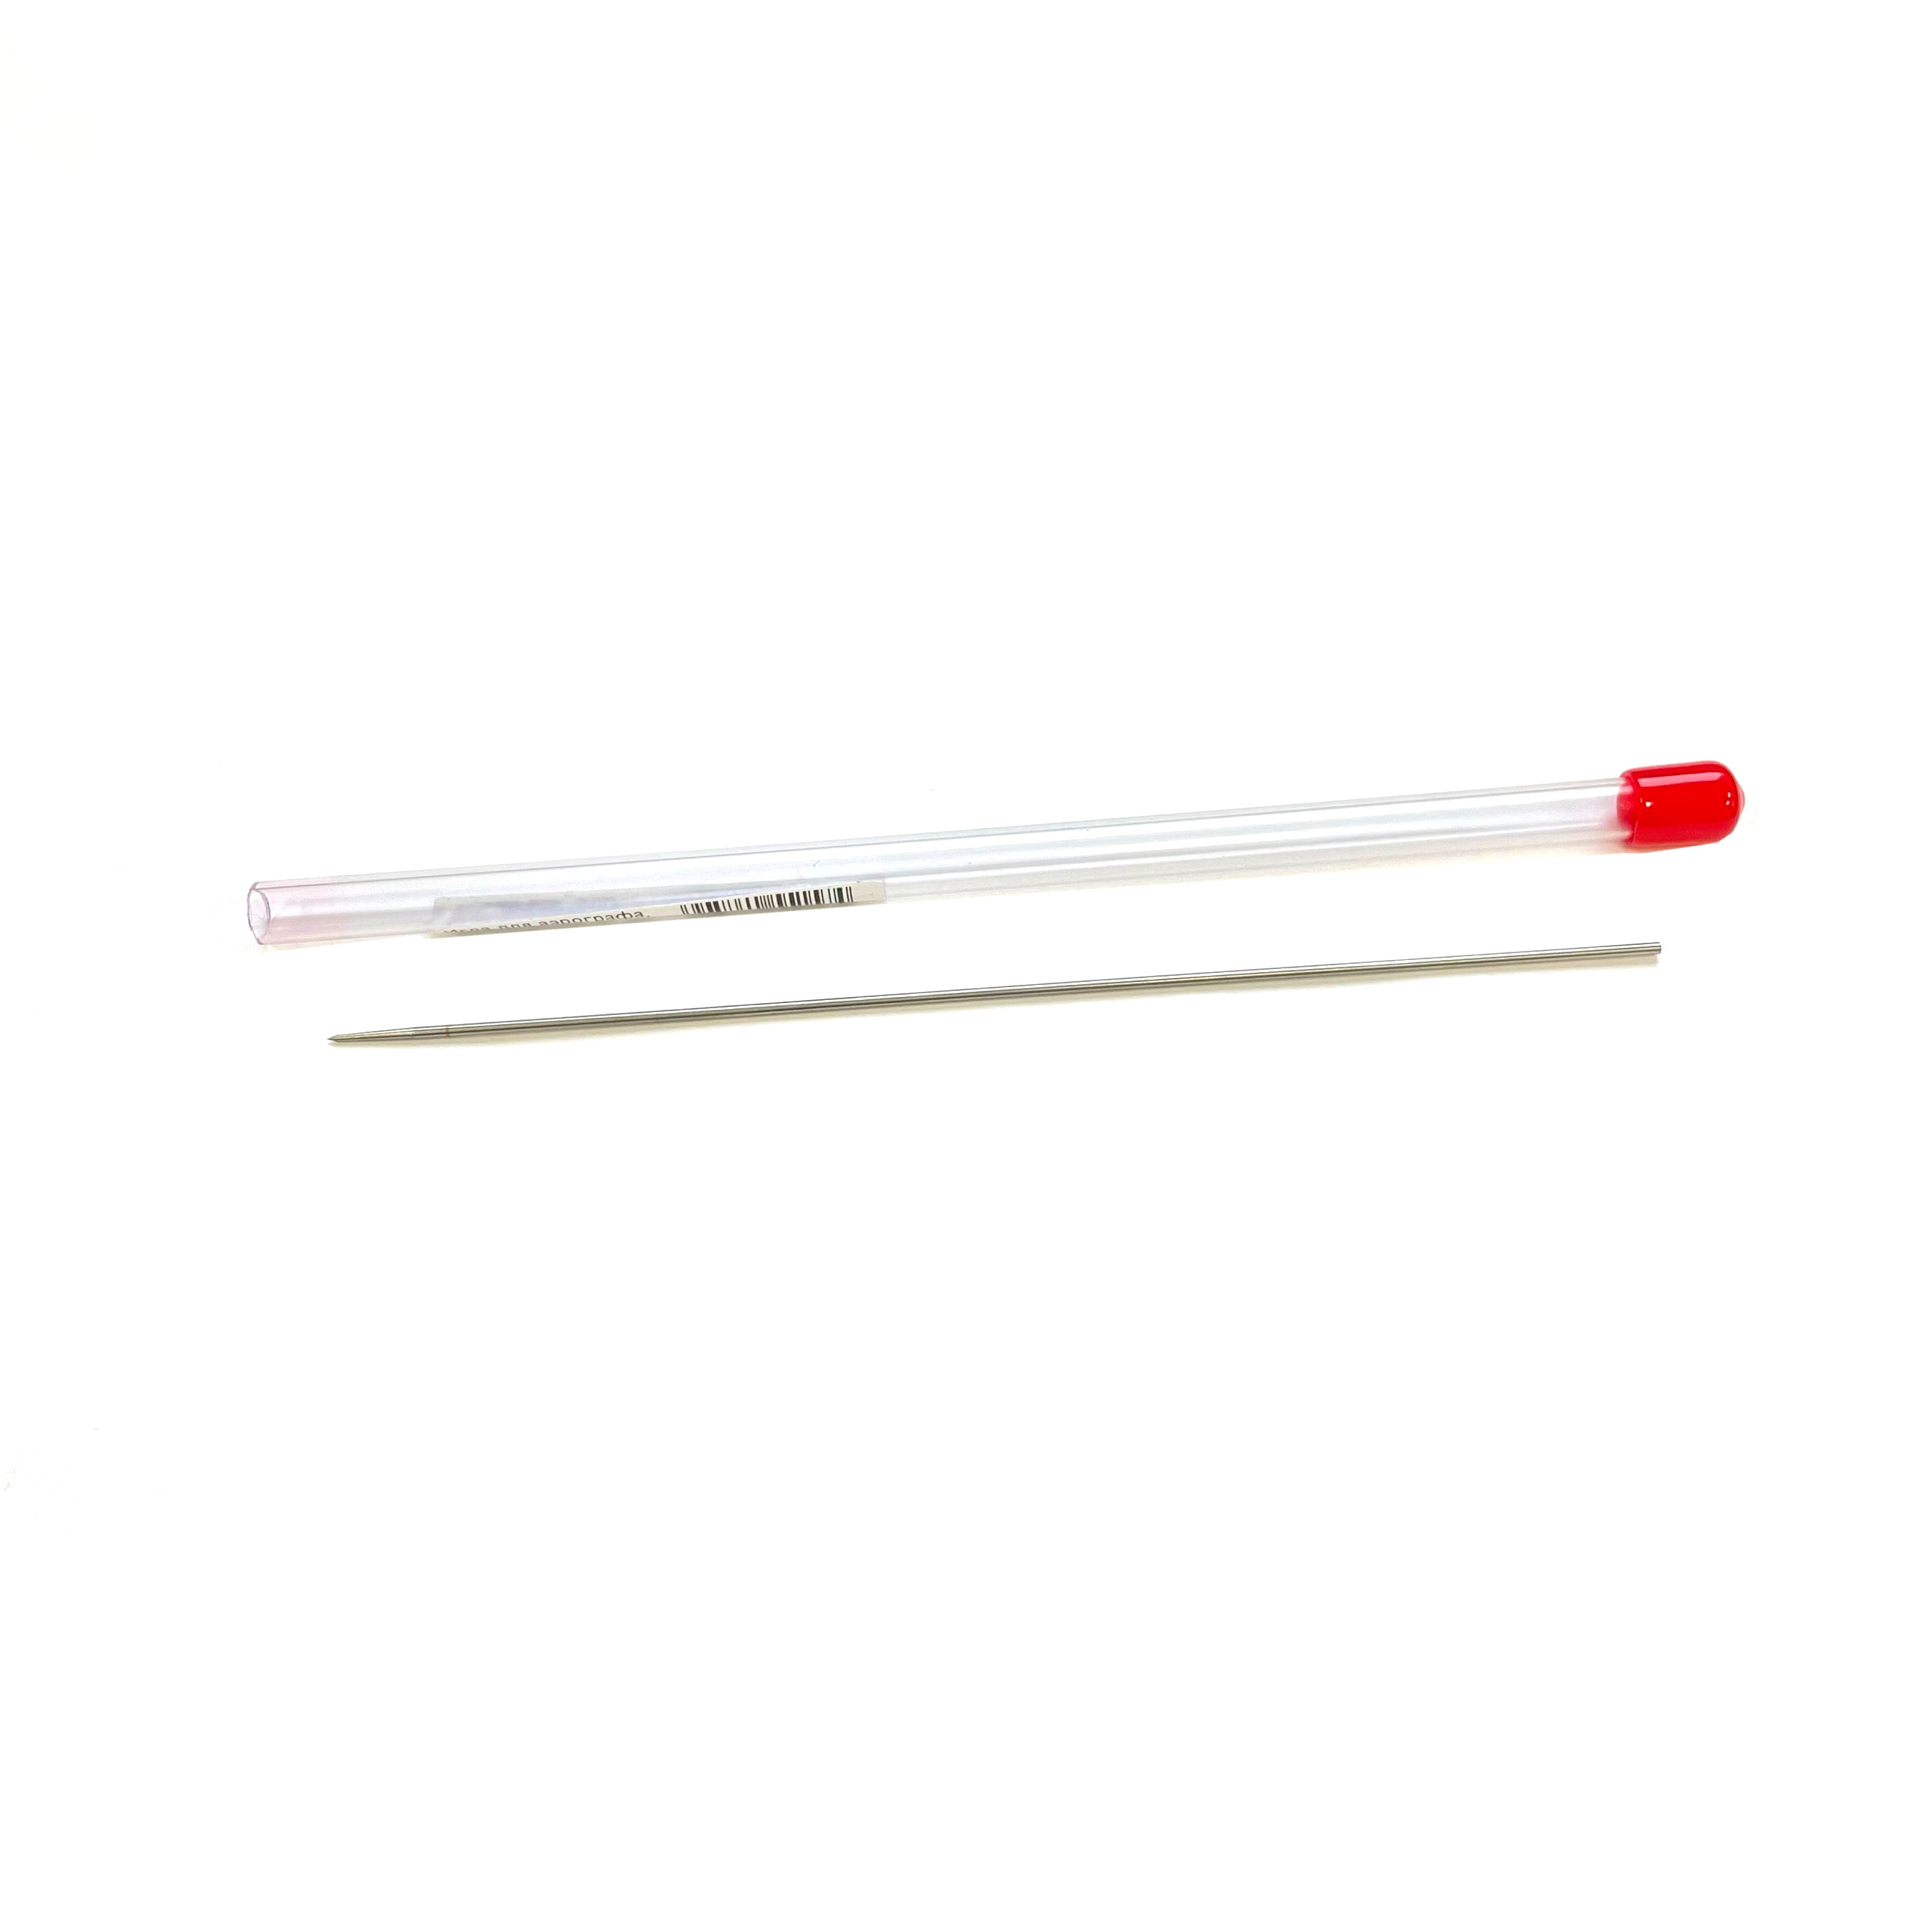 5157 JAS High-strength airbrush needle, length 130 mm, 0.7 mm